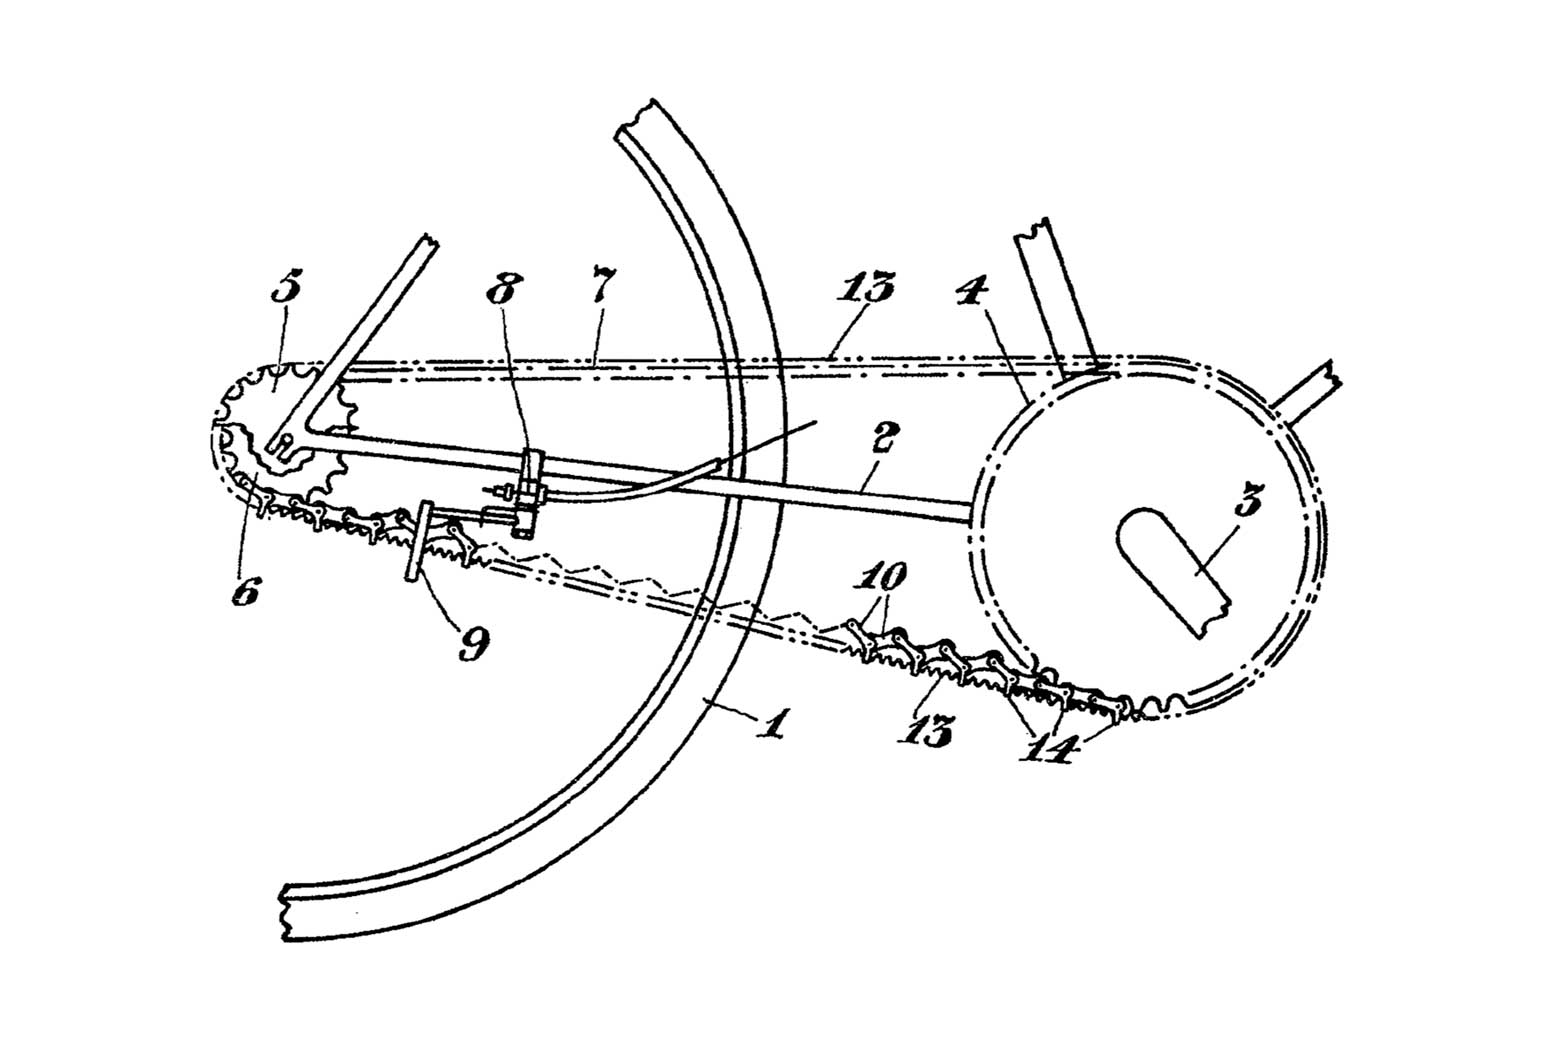 UK Patent # 445,527 - Brevix main image